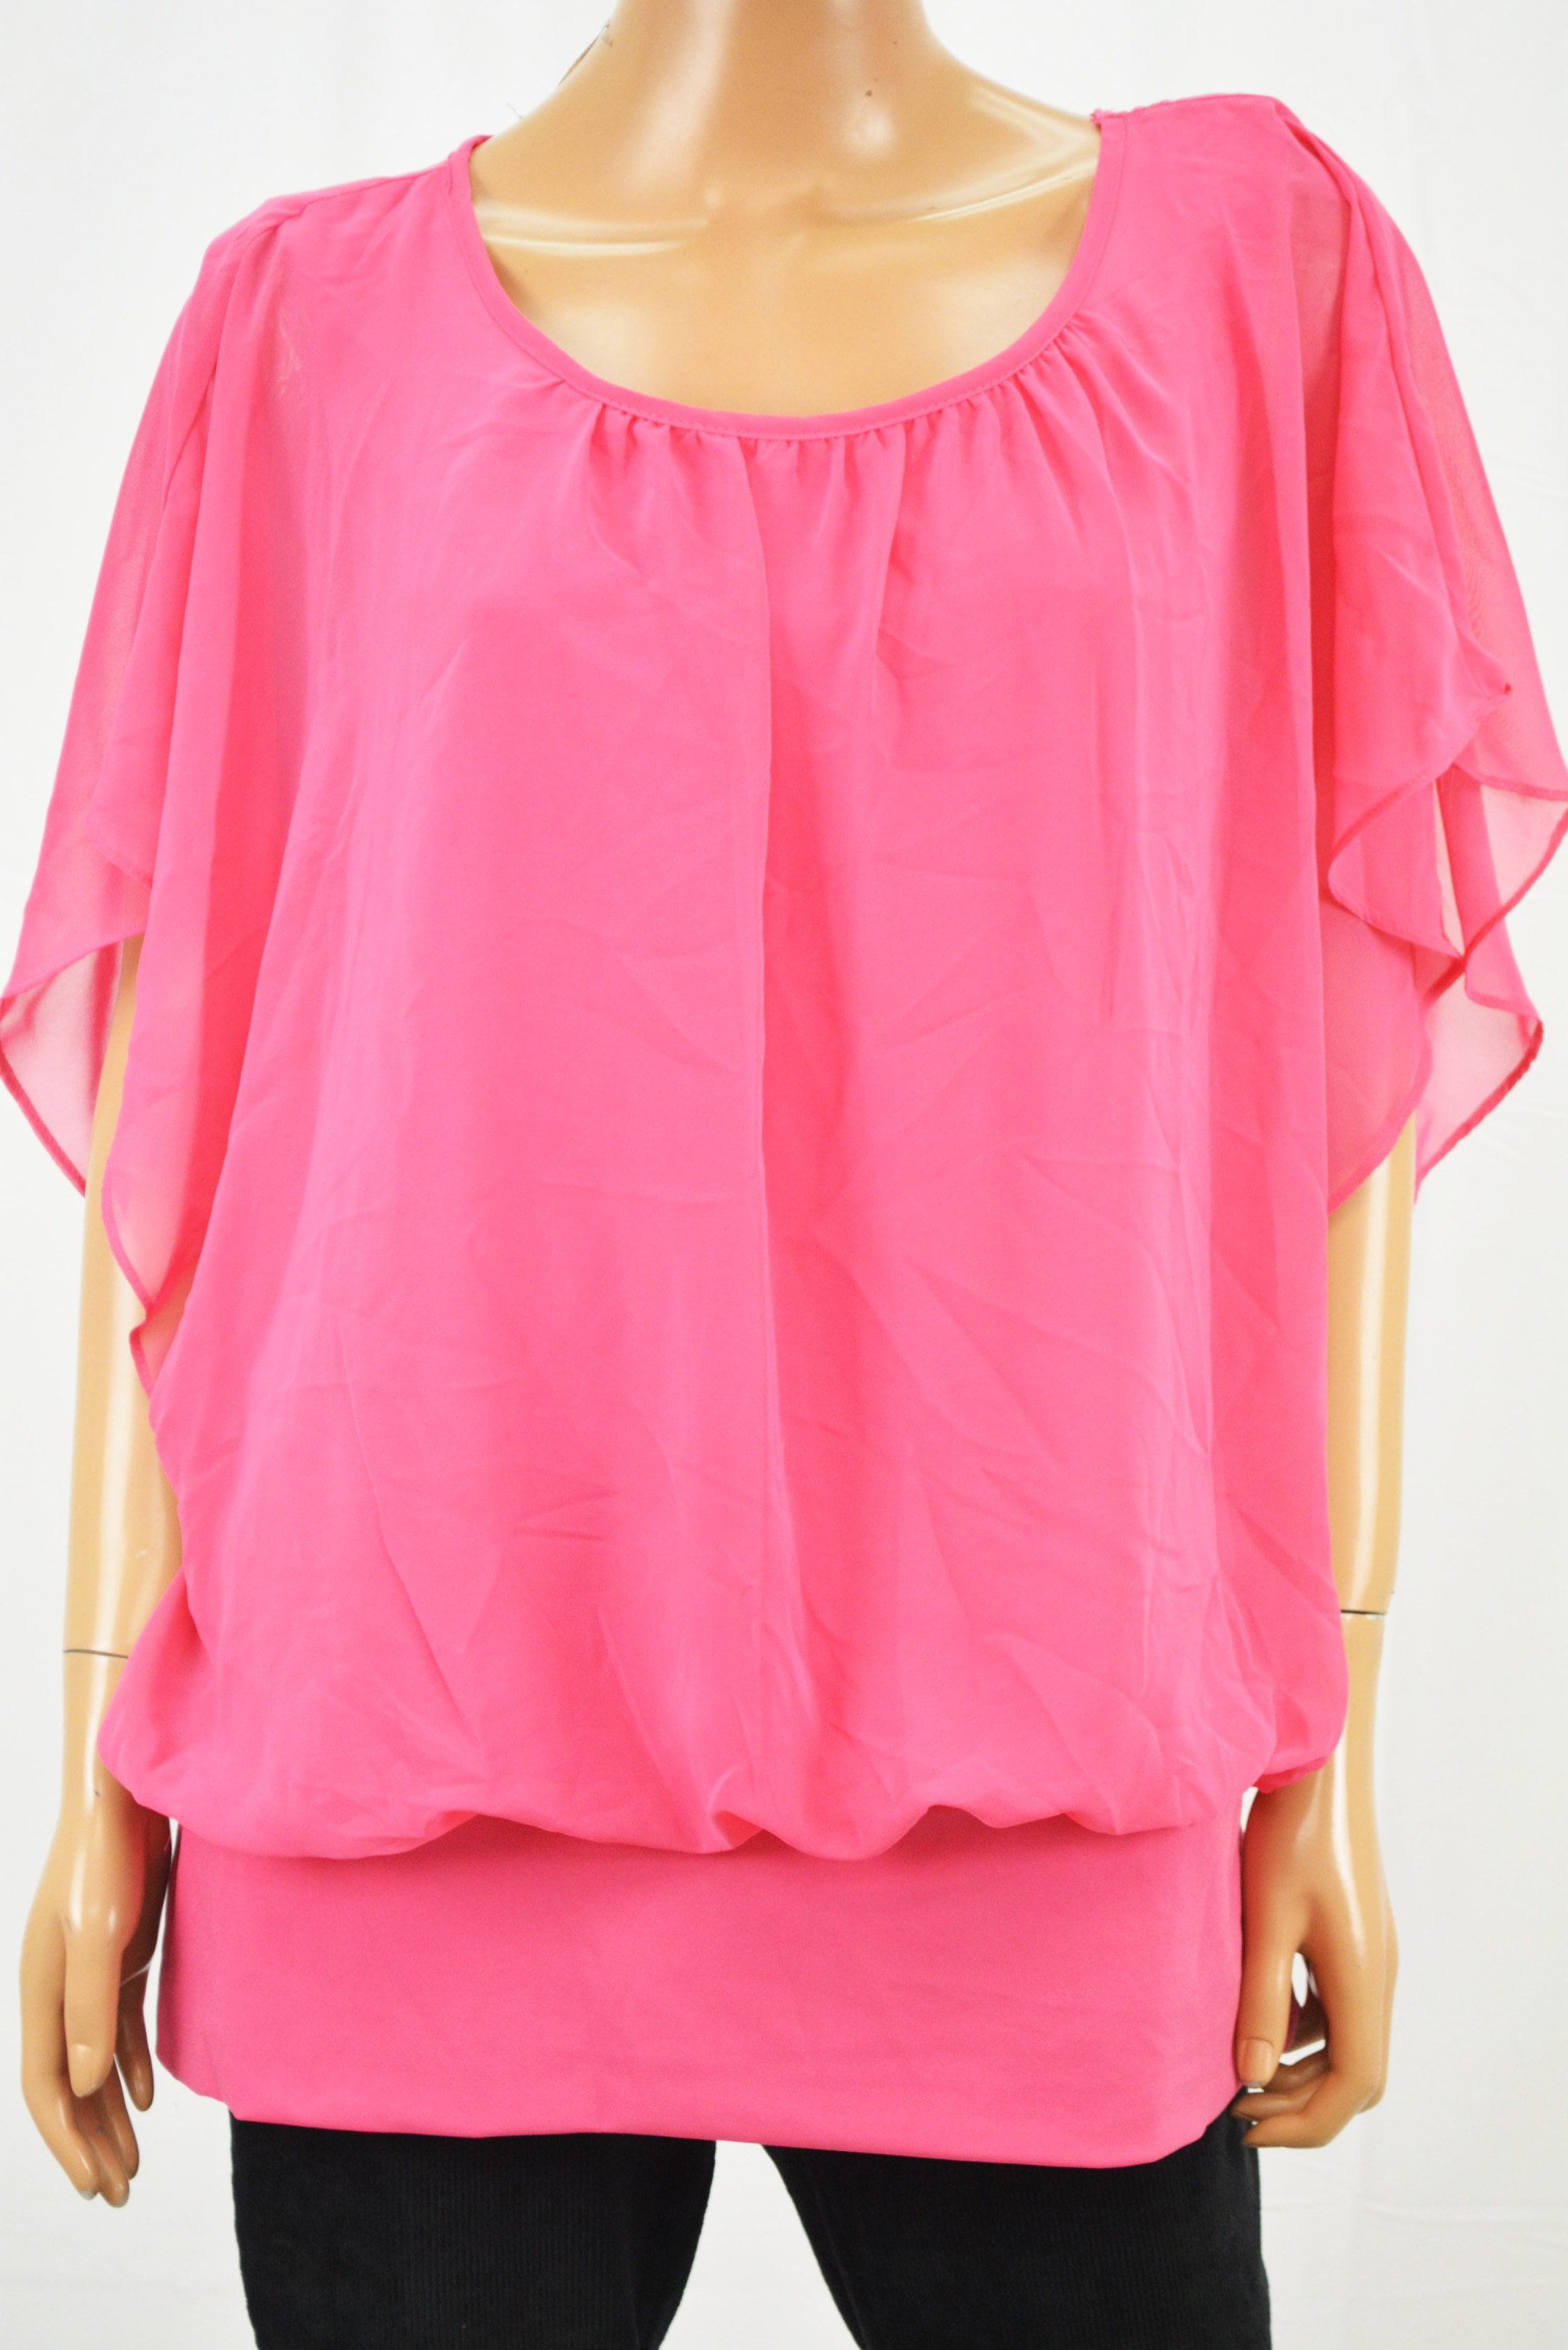 JM Collection Women Pink Blouson Banded-Hem Blouse Top X-Large XL ...